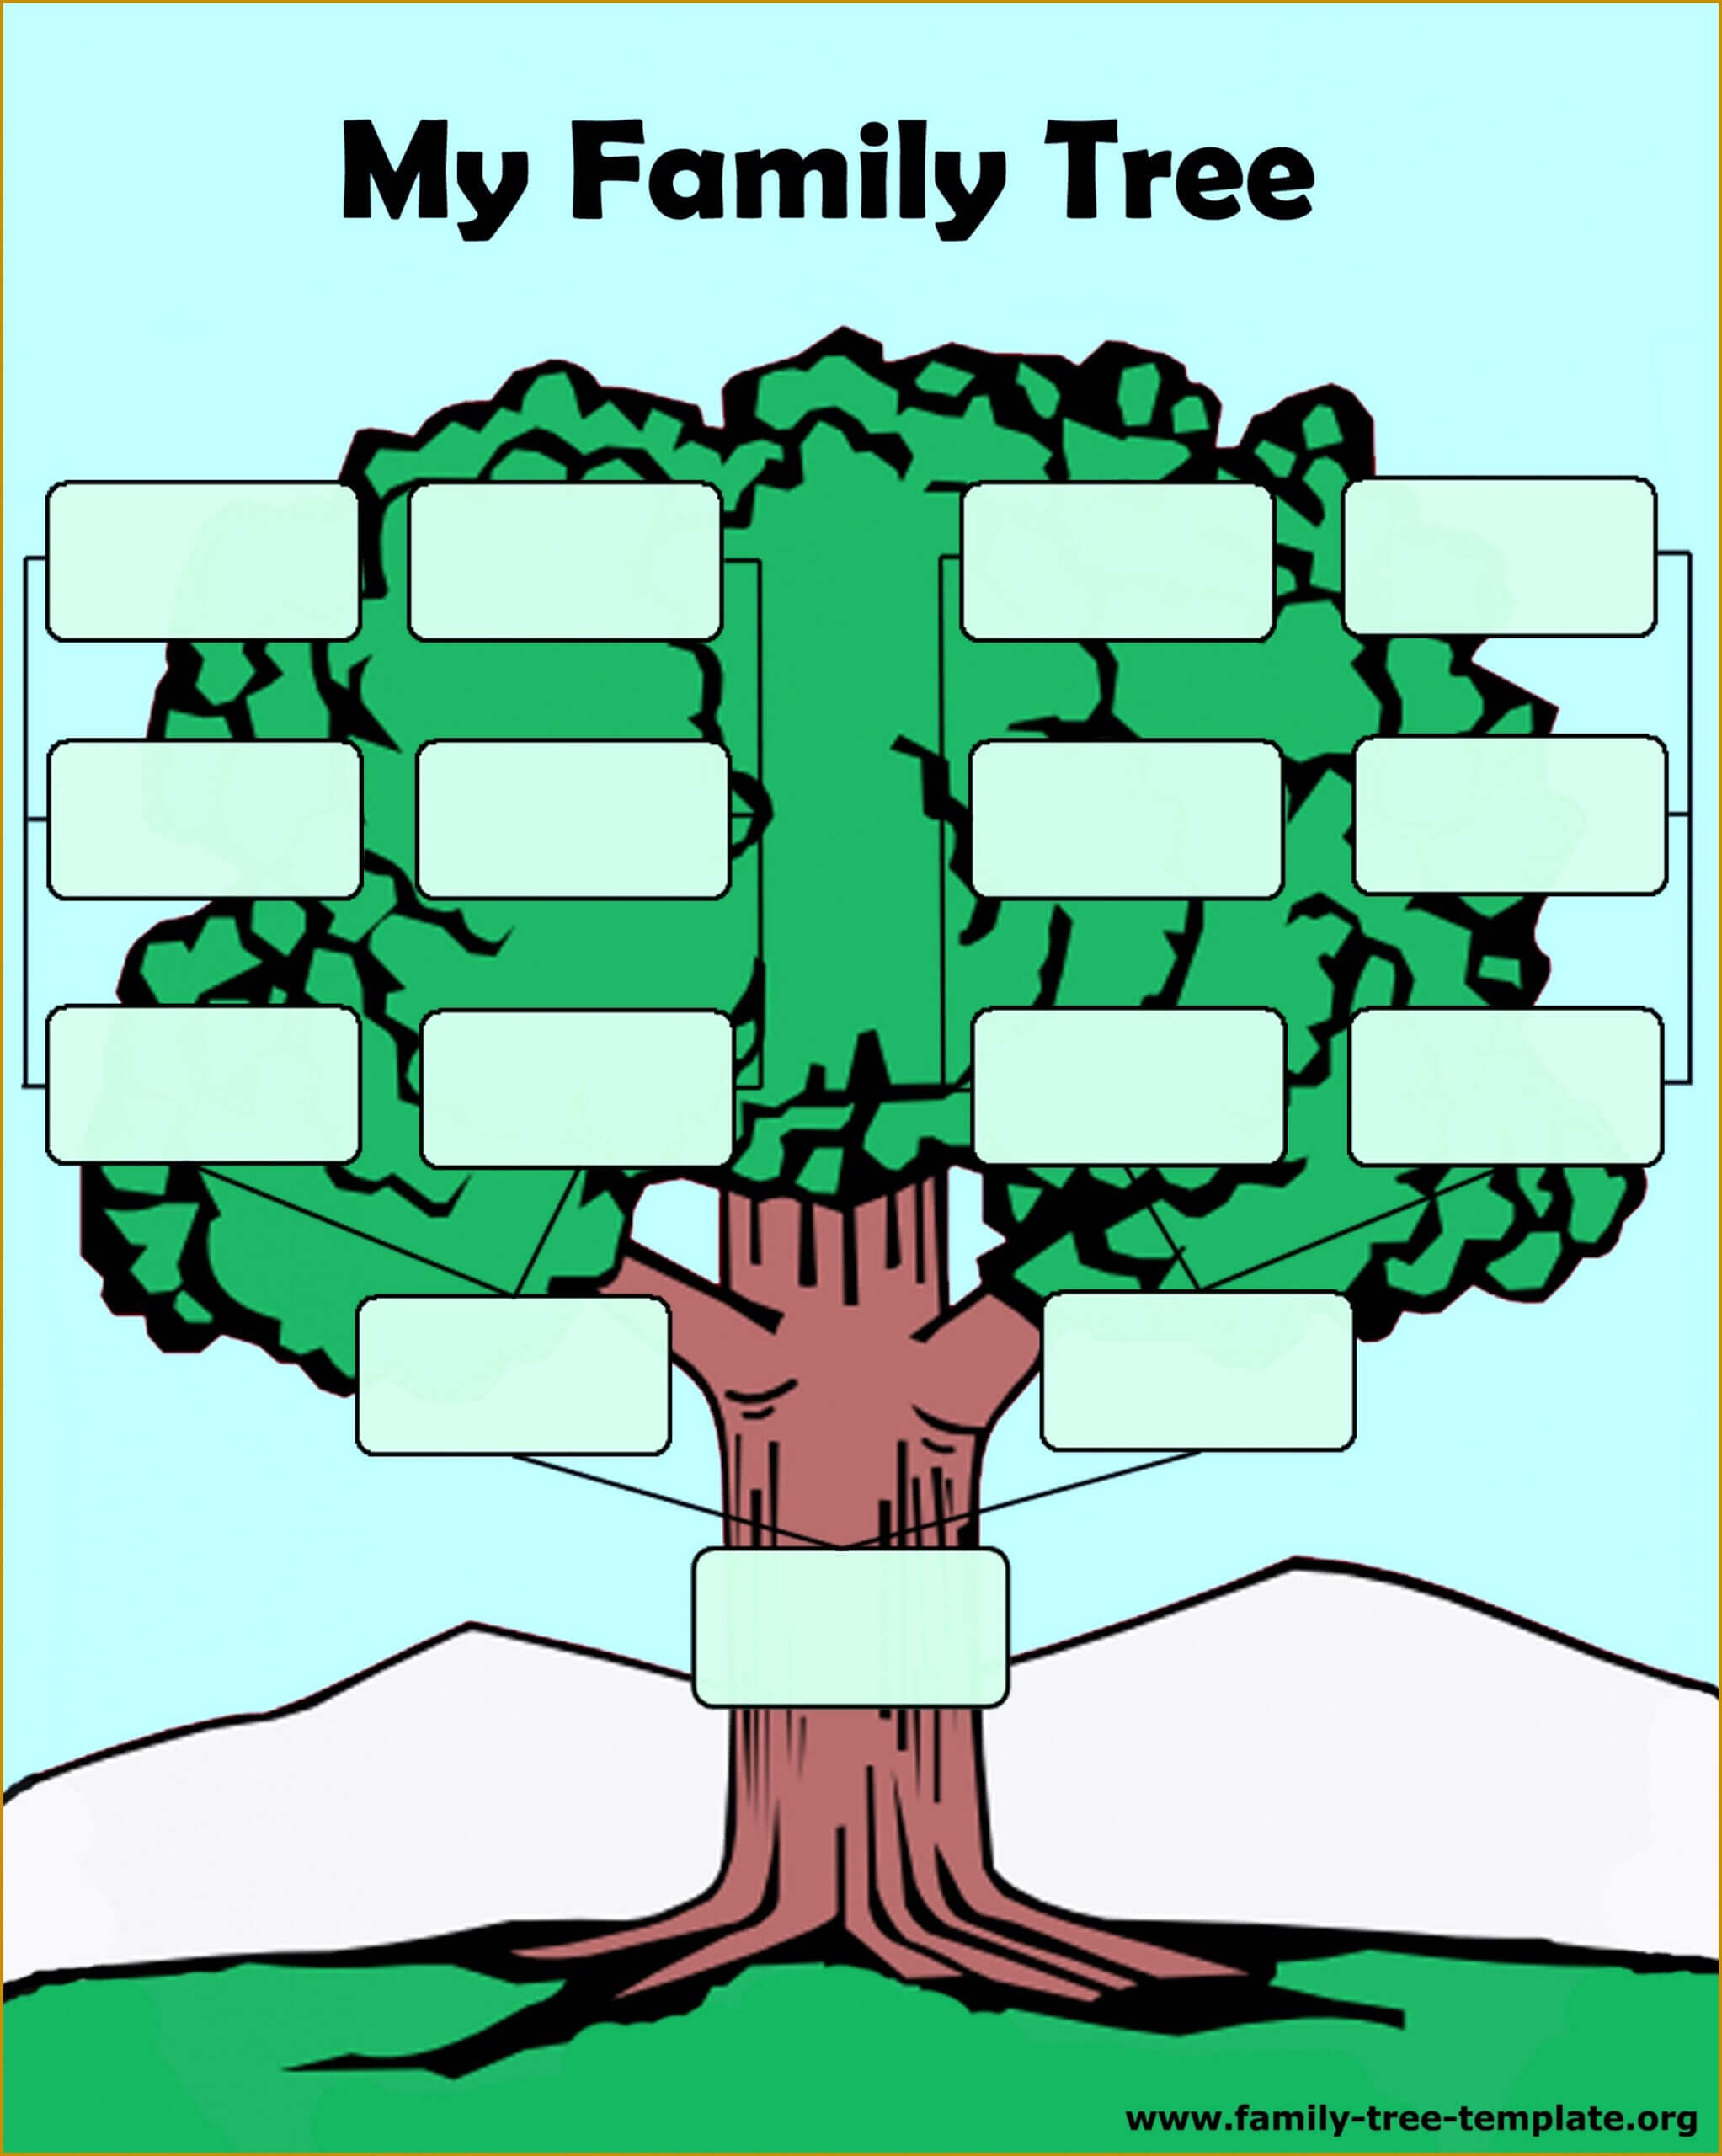 031 Simple Family Tree Template Breathtaking Ideas 3 Within 3 Generation Family Tree Template Word